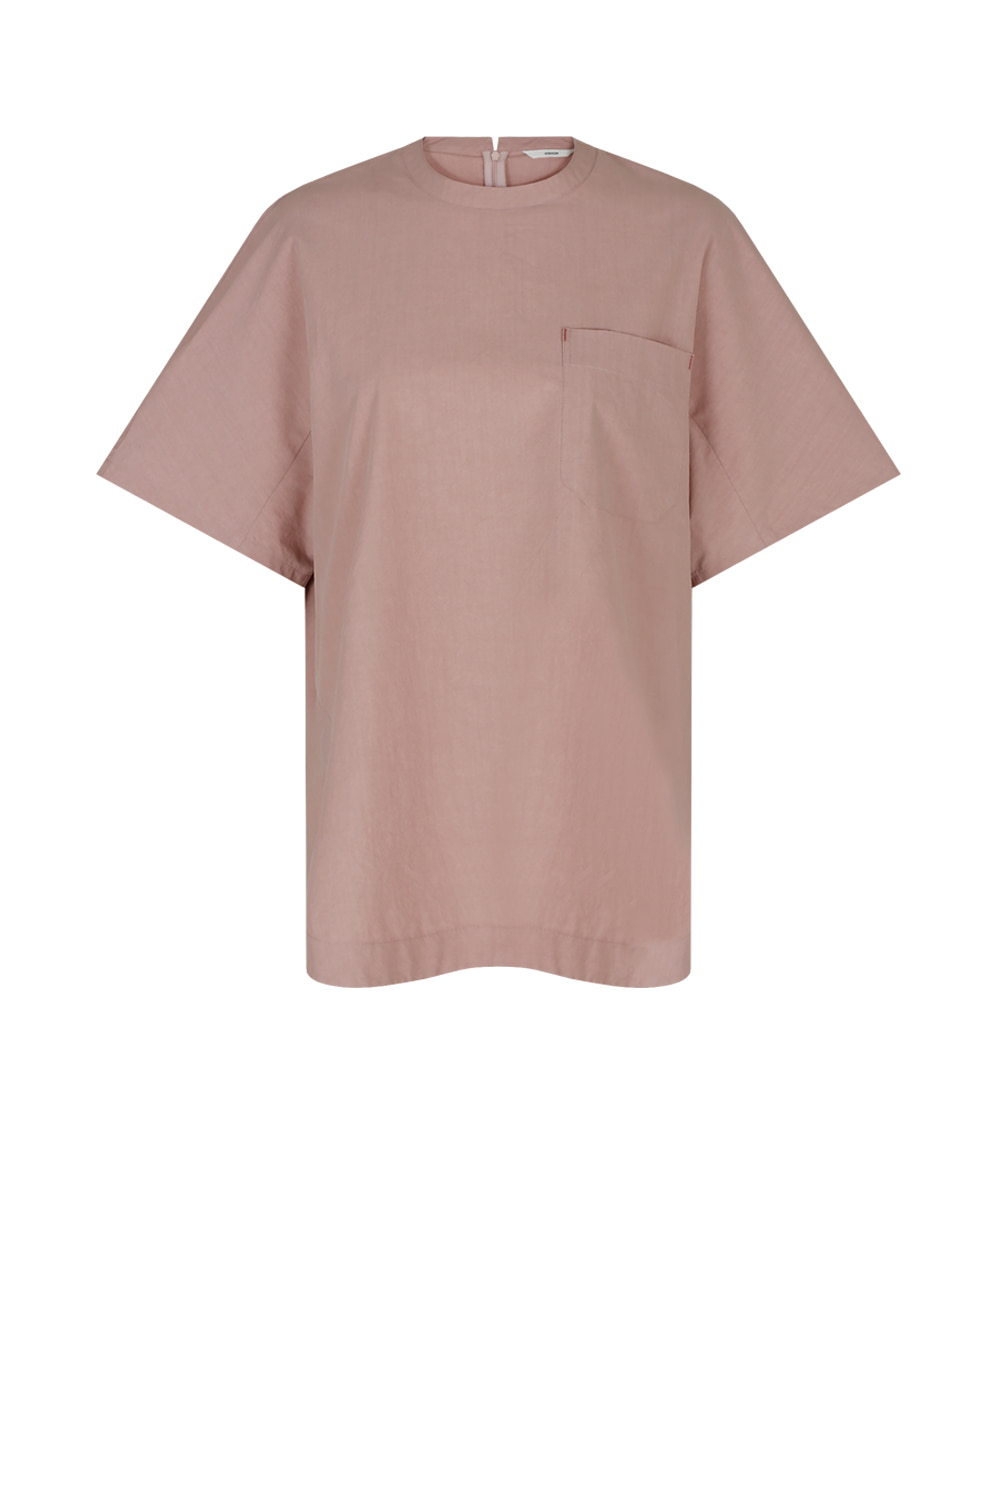 Round pocket shirt_Rust pink